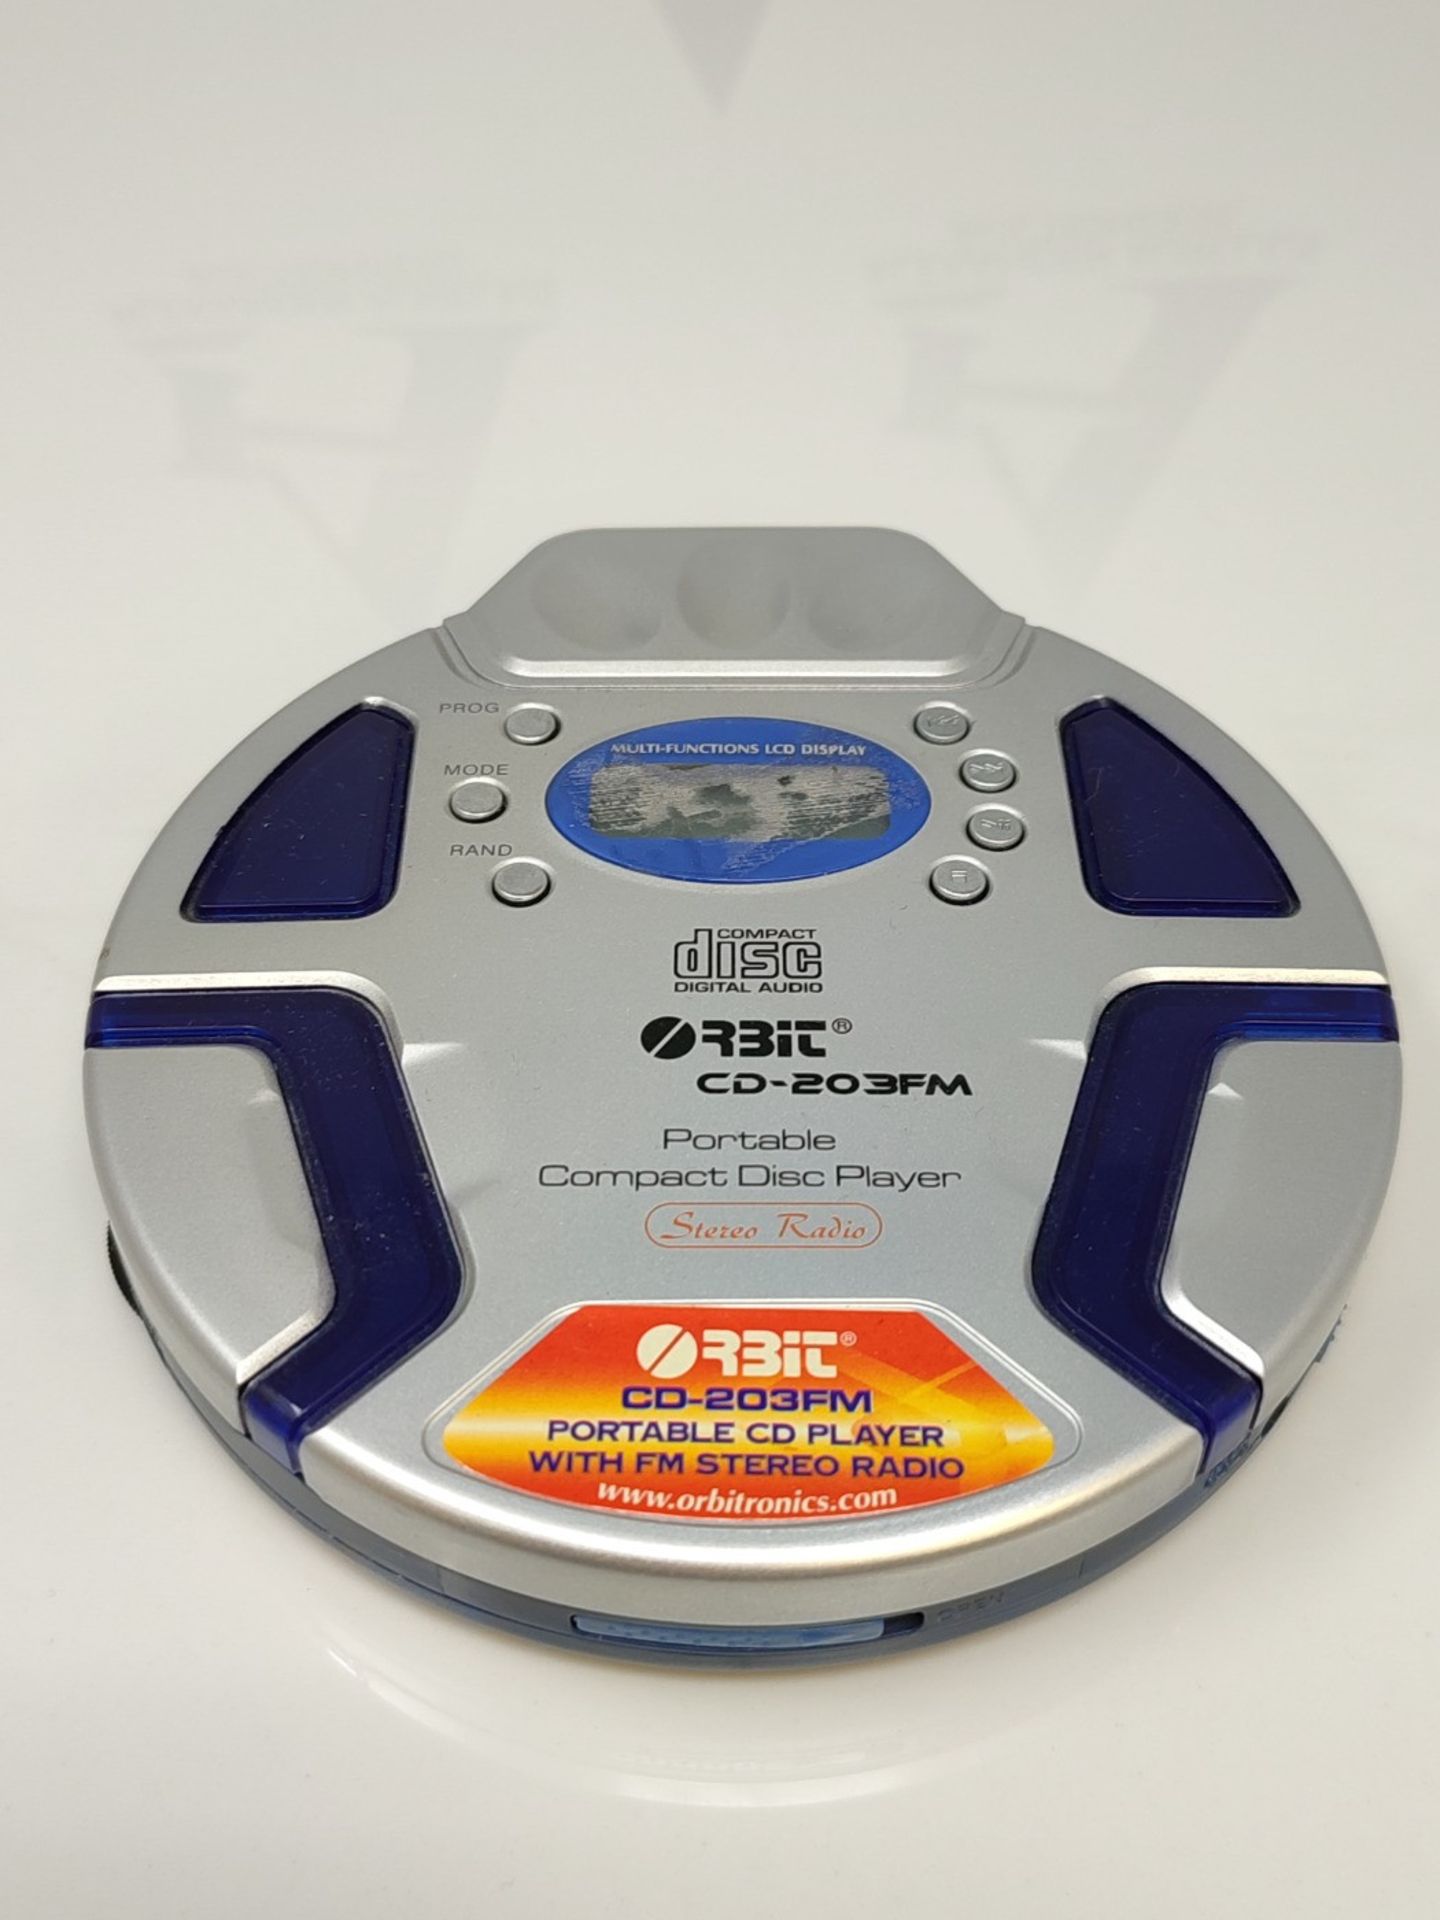 Orbit Disc Compact Digital Audio CD-203FM - Image 2 of 2